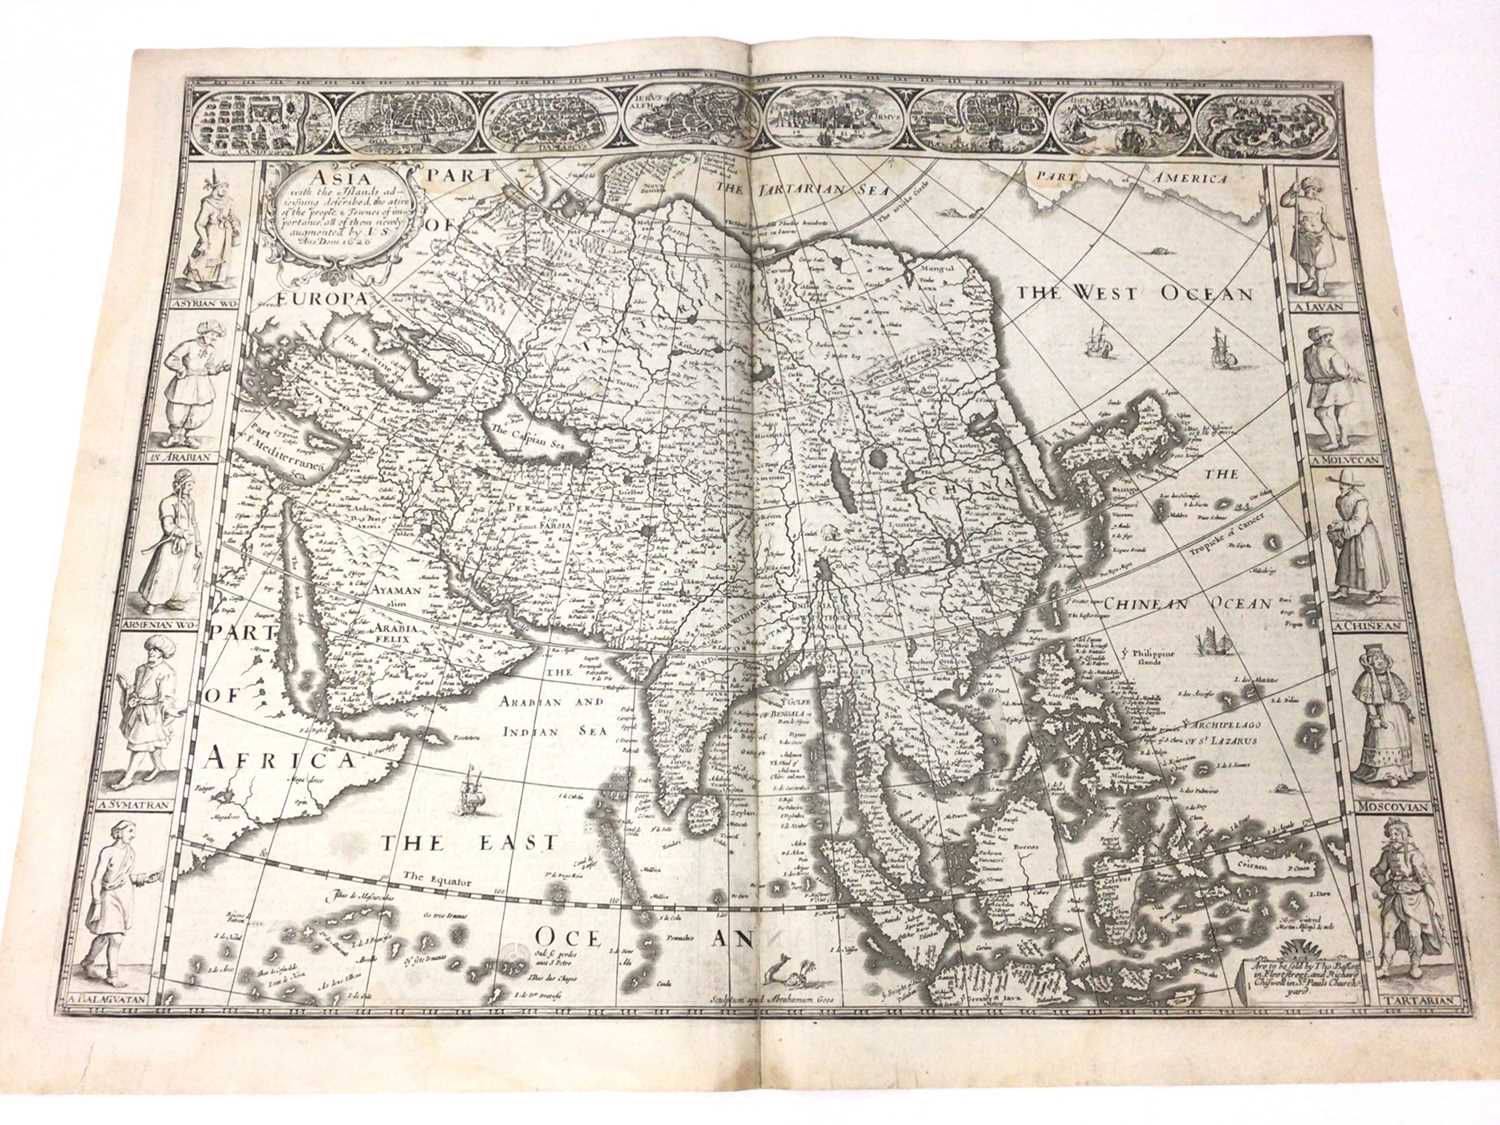 John Speed - 17th century engraved map of Asia